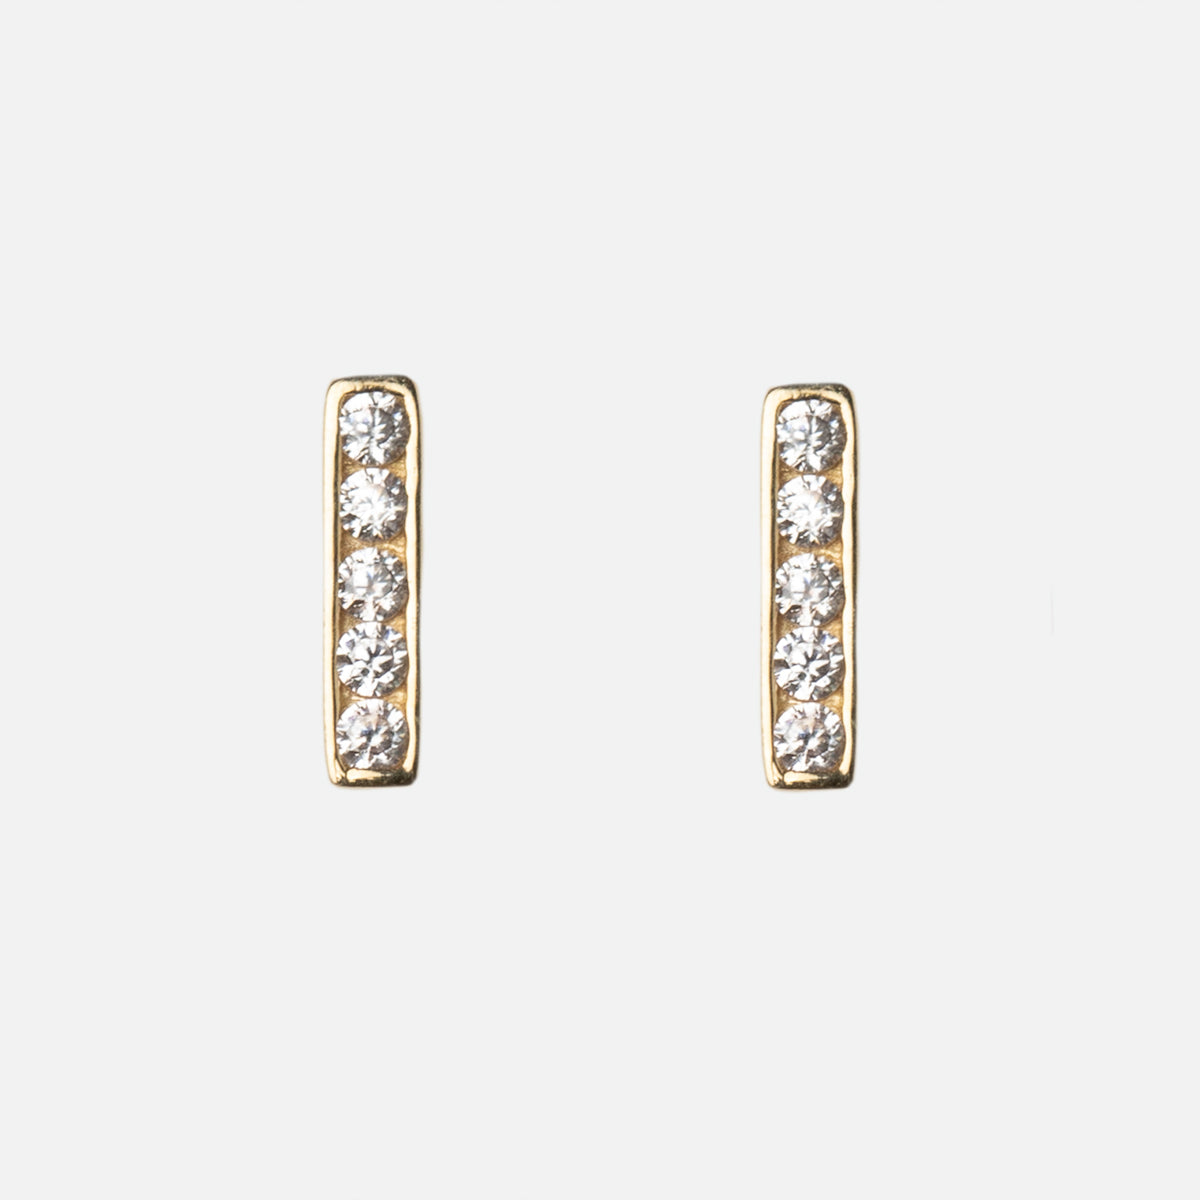 10k gold fixed bar earrings